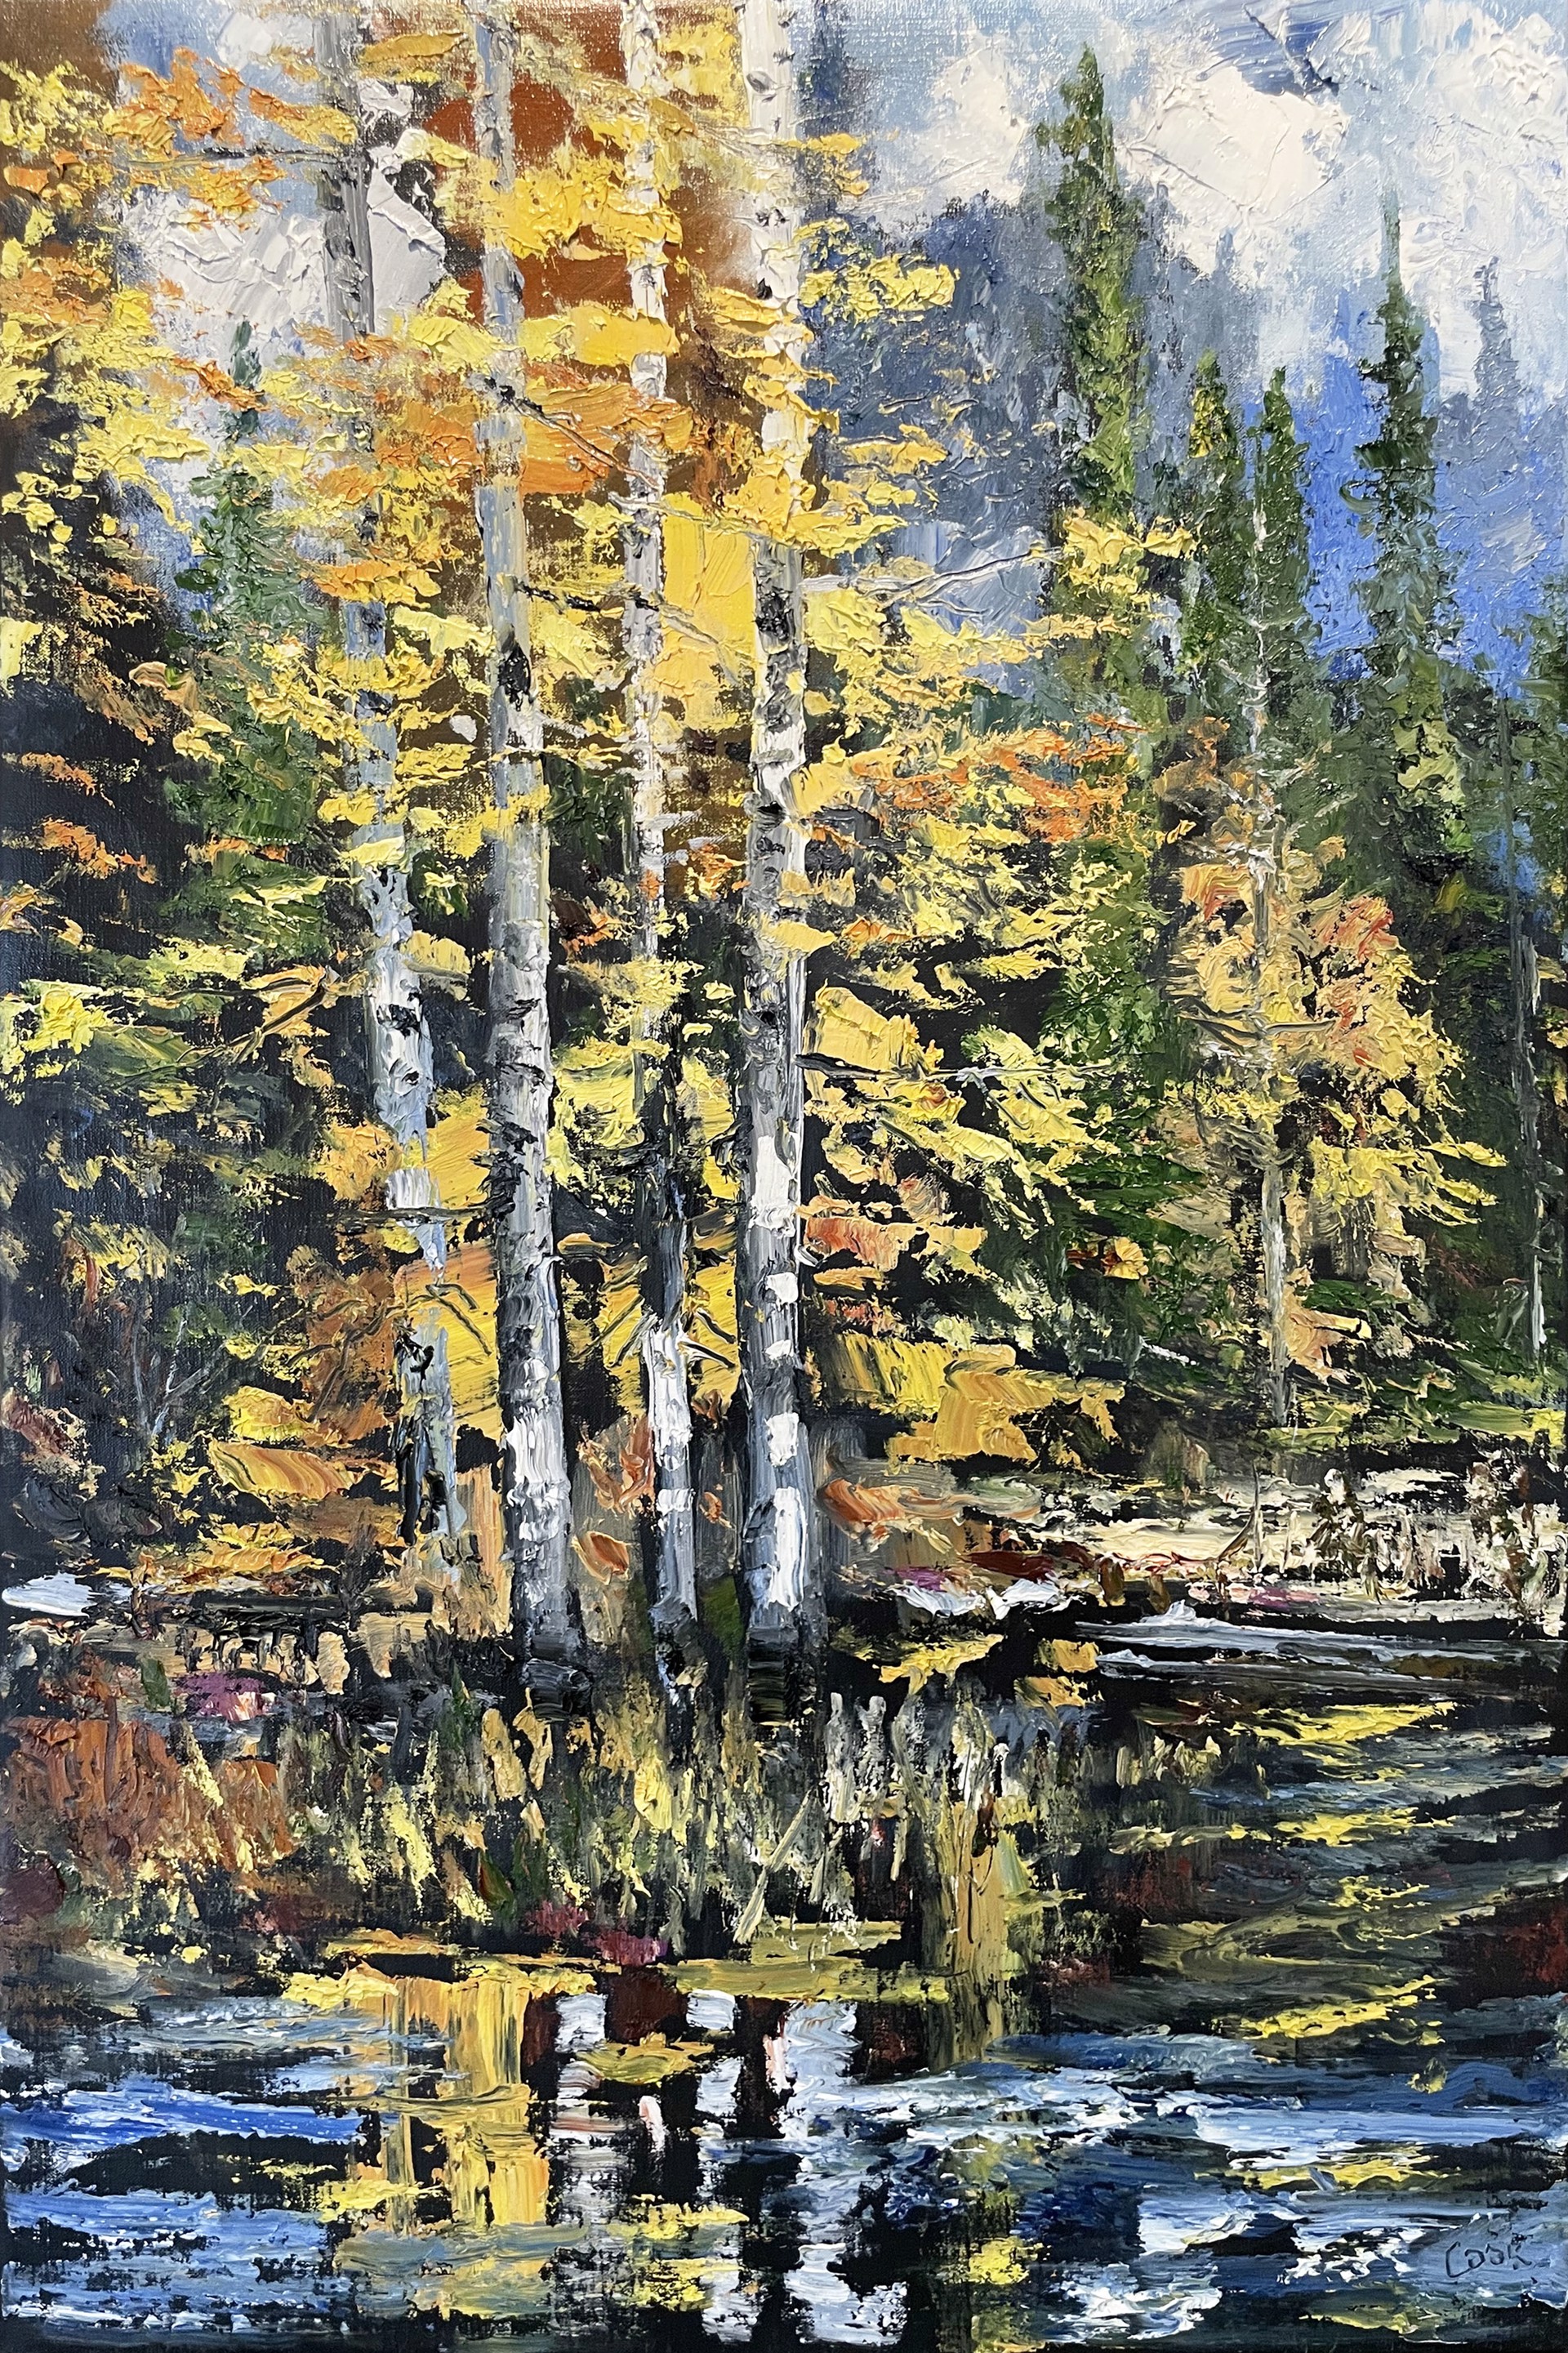 Aspen - Beaver Pond #1 by James Cook